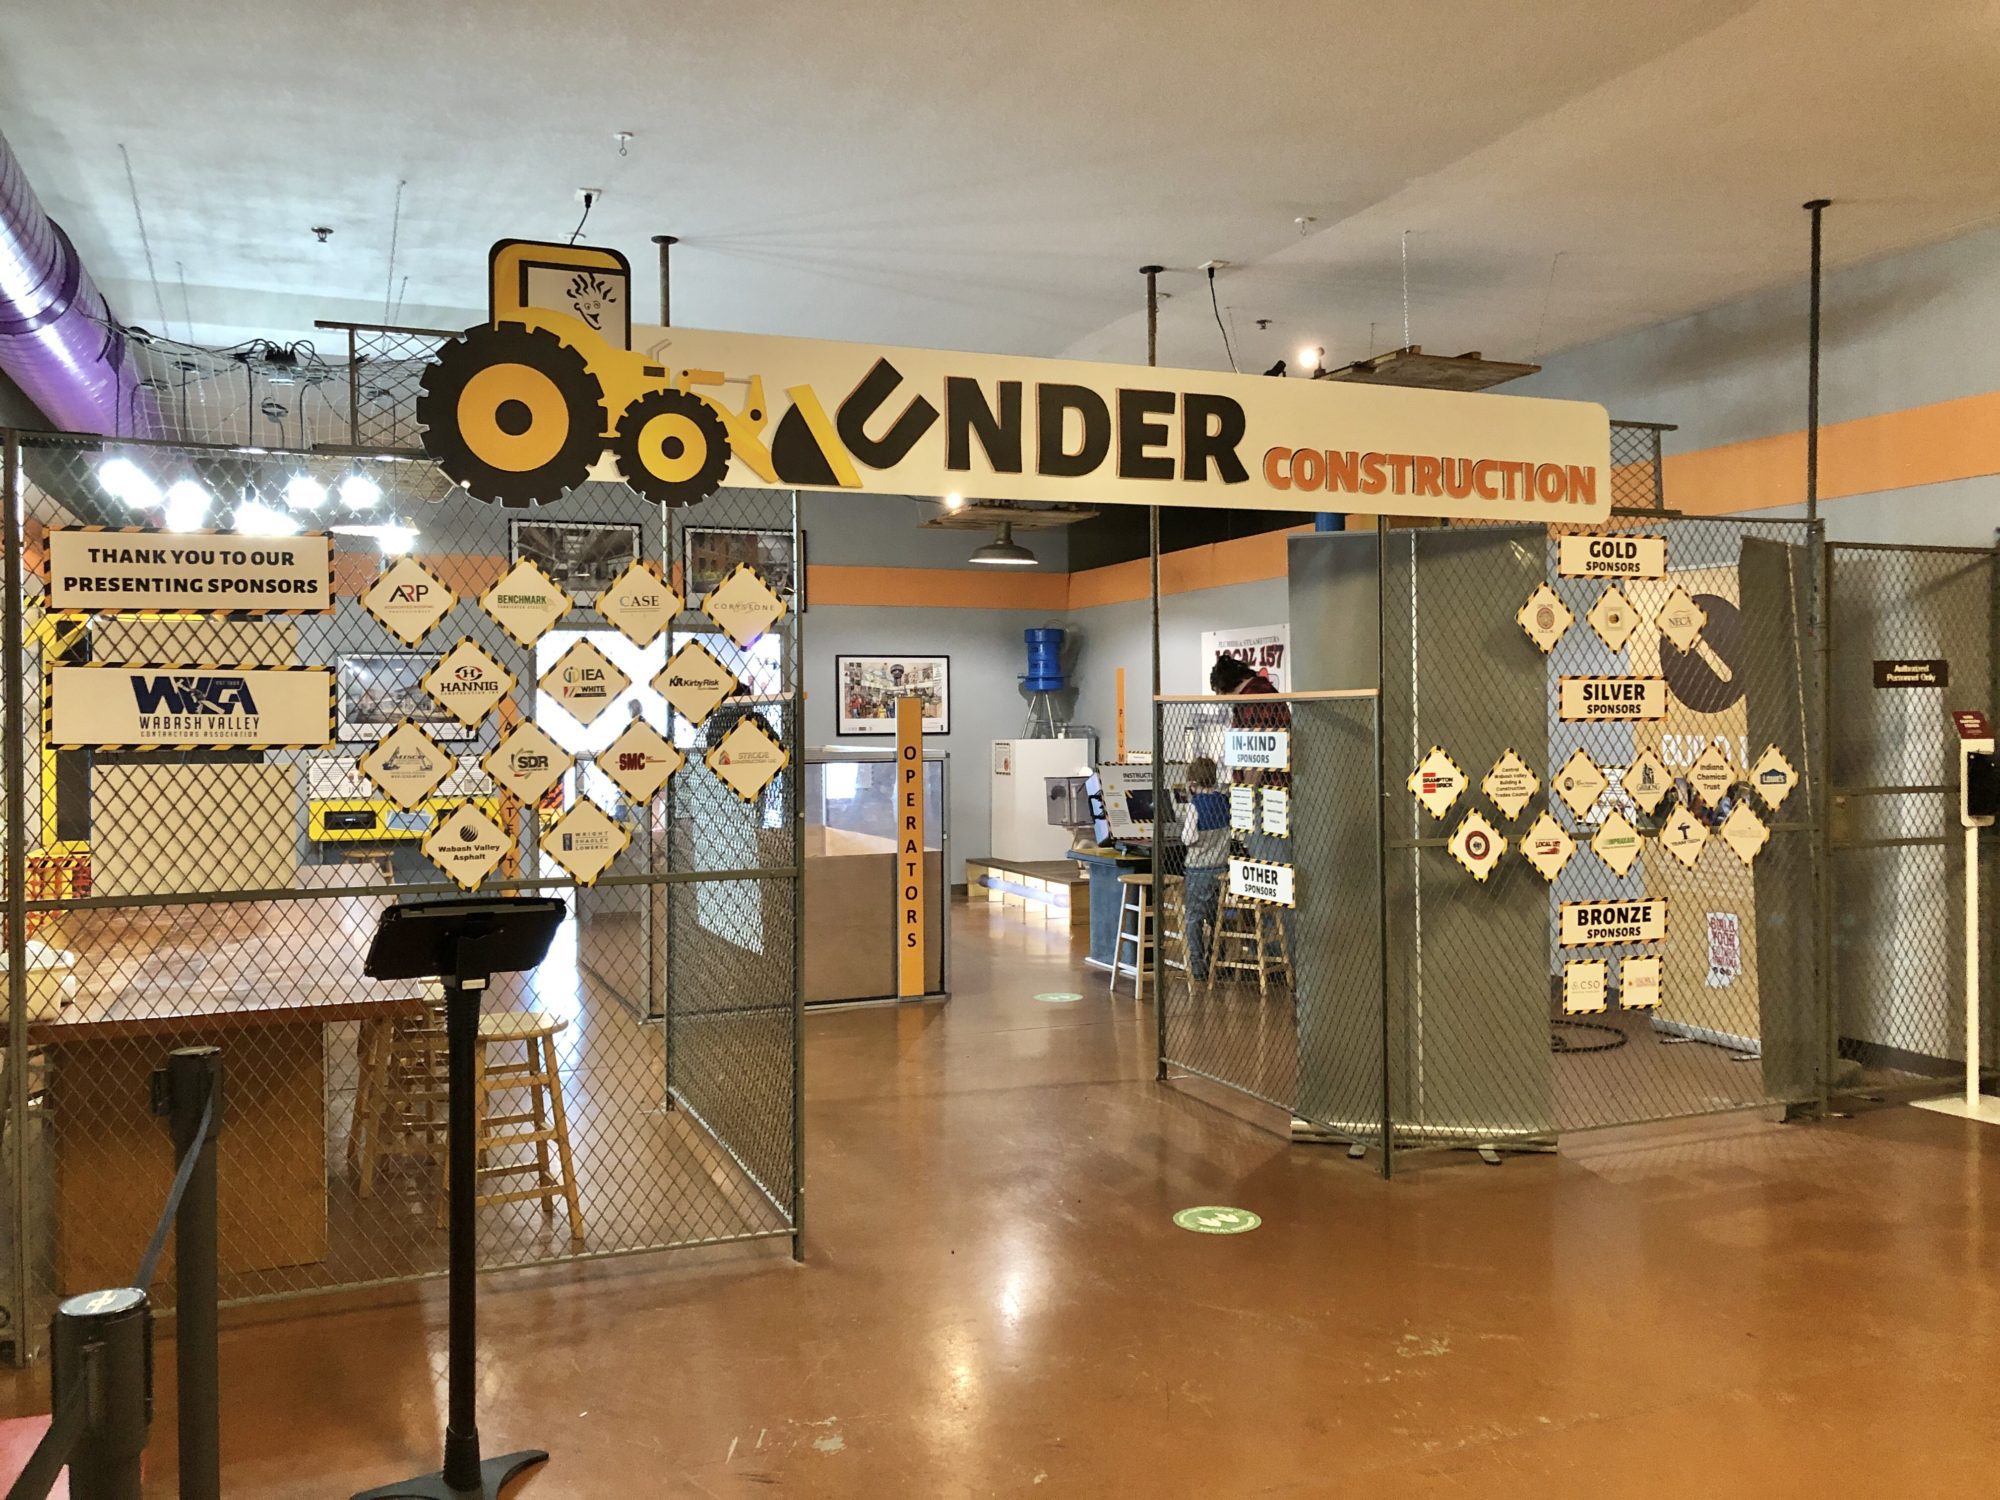 Under Construction Exhibit at the Terre Haute Children's Museum